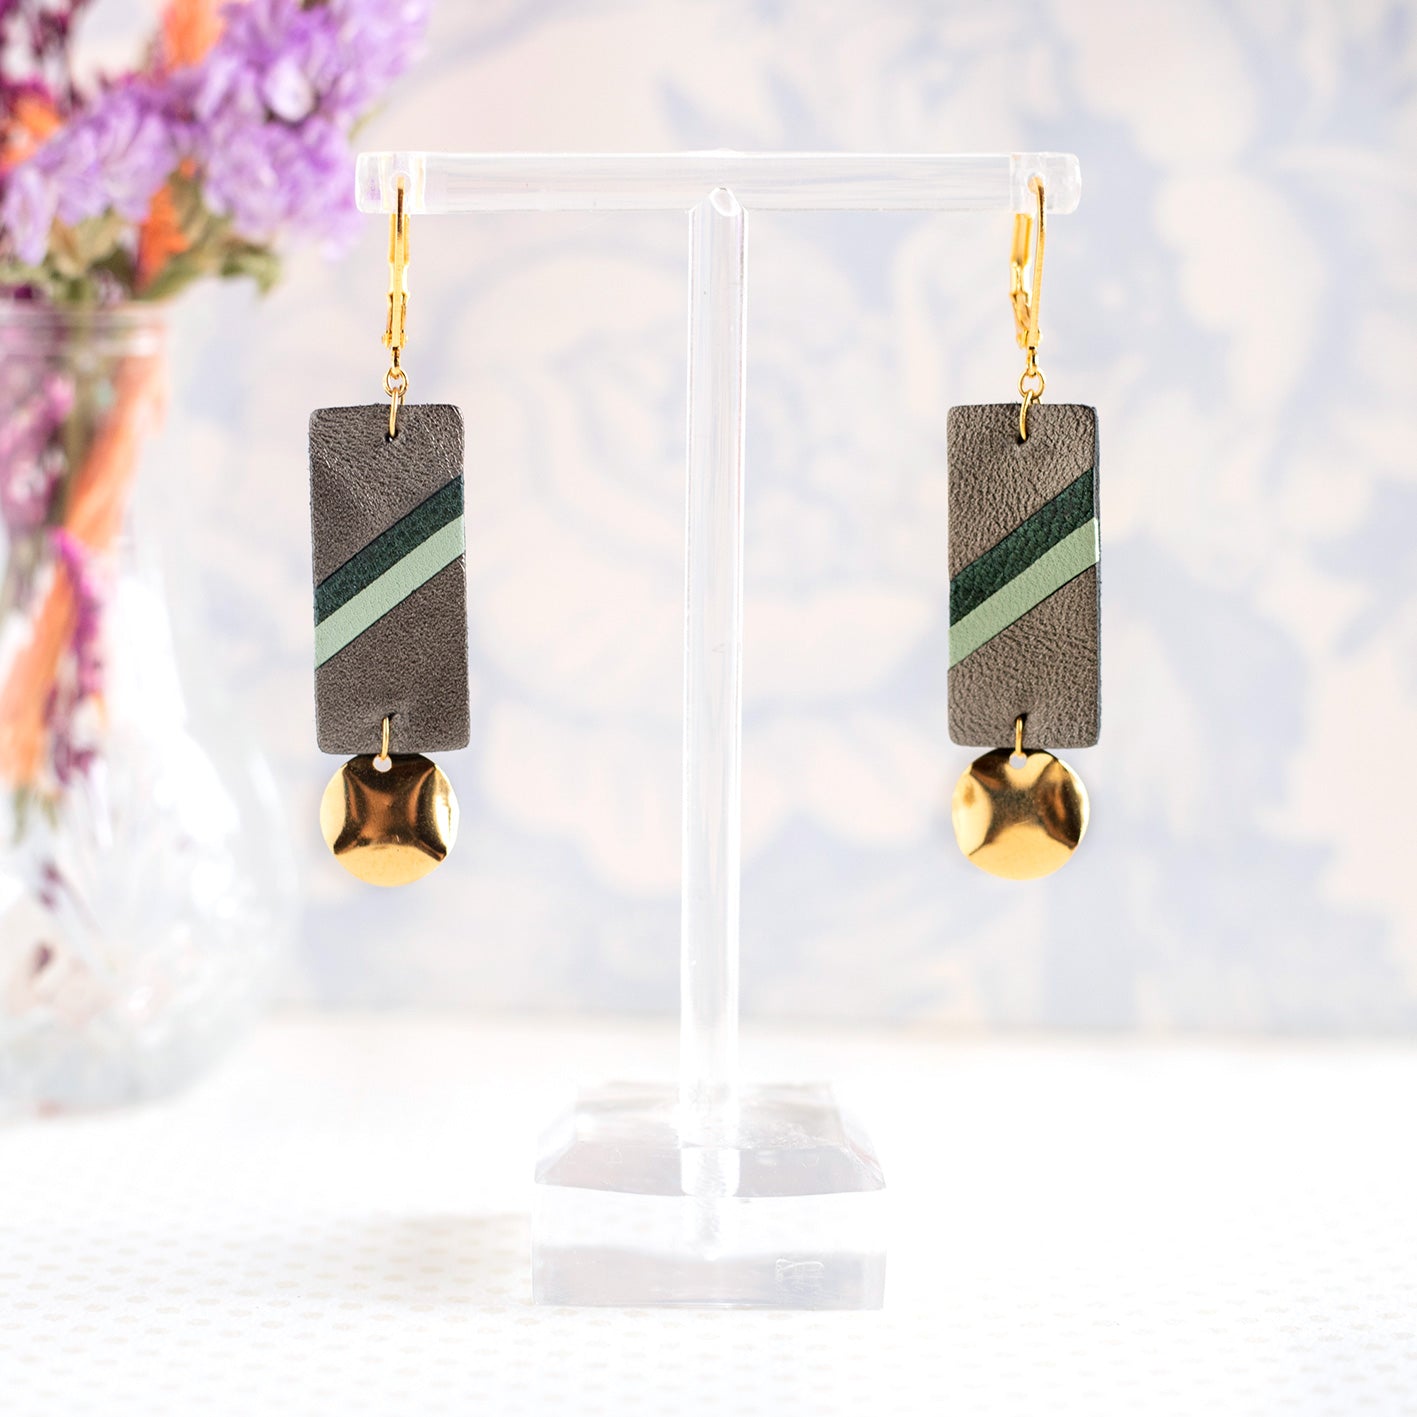 Metal gray and green Margot earrings